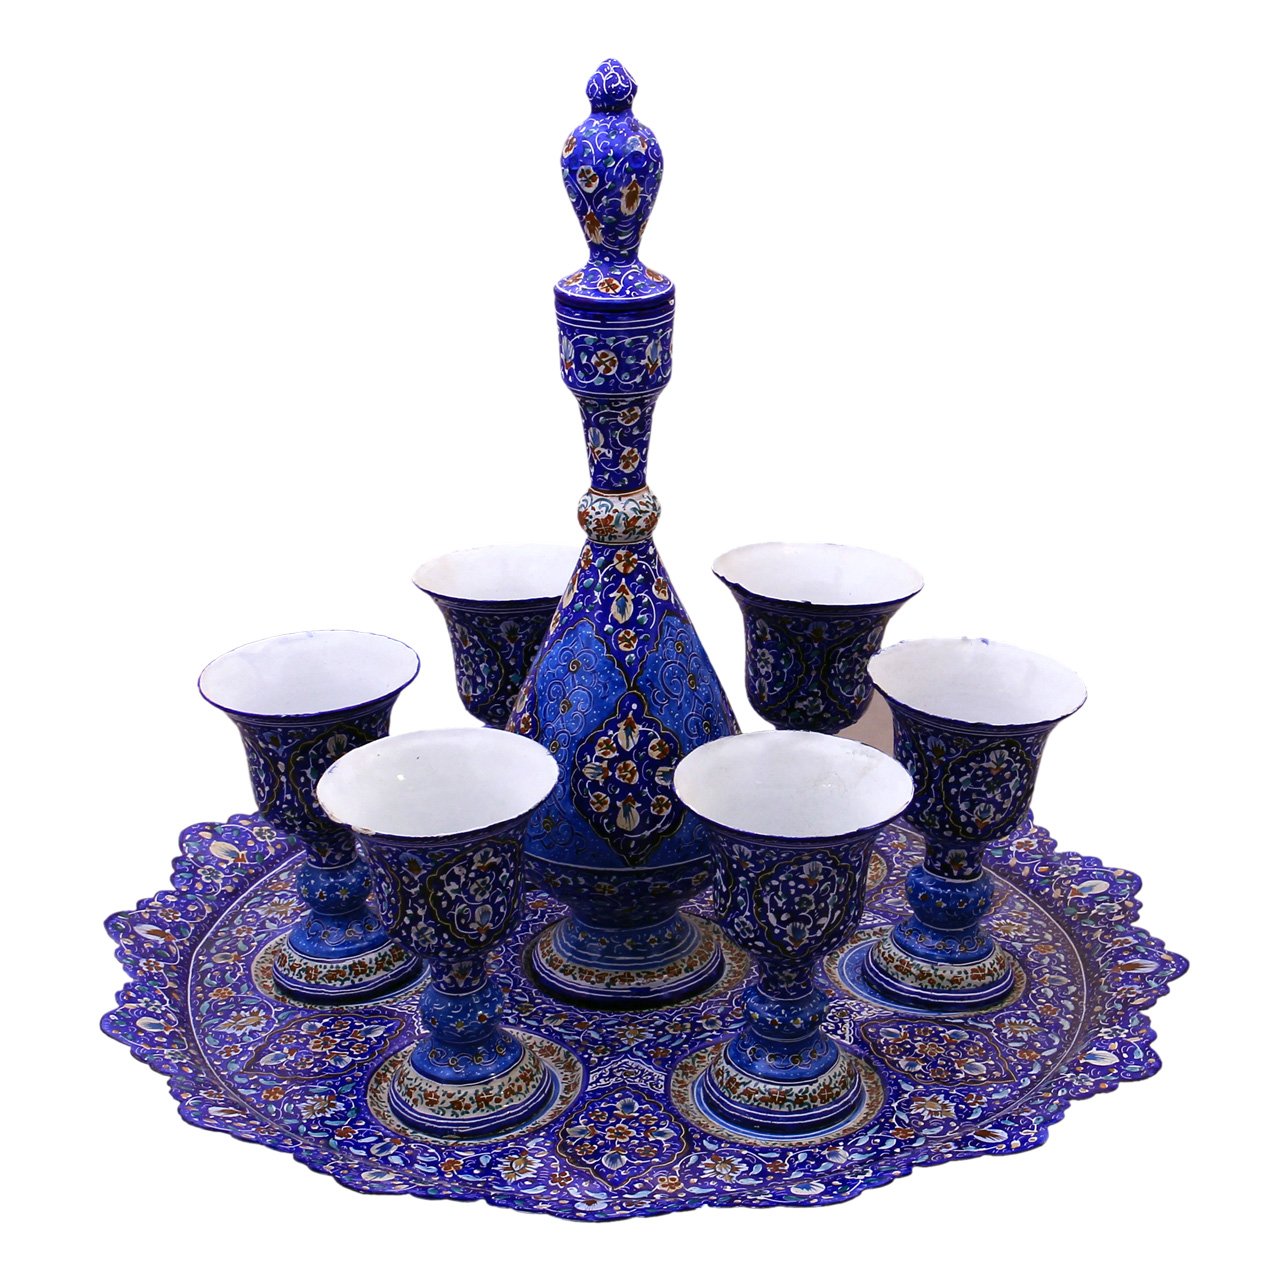 Iranian Enamel Handicraft Glasses and Pitcher Collection Model 10130,shopping iranian handicrafts,persian enamel,blue enamel